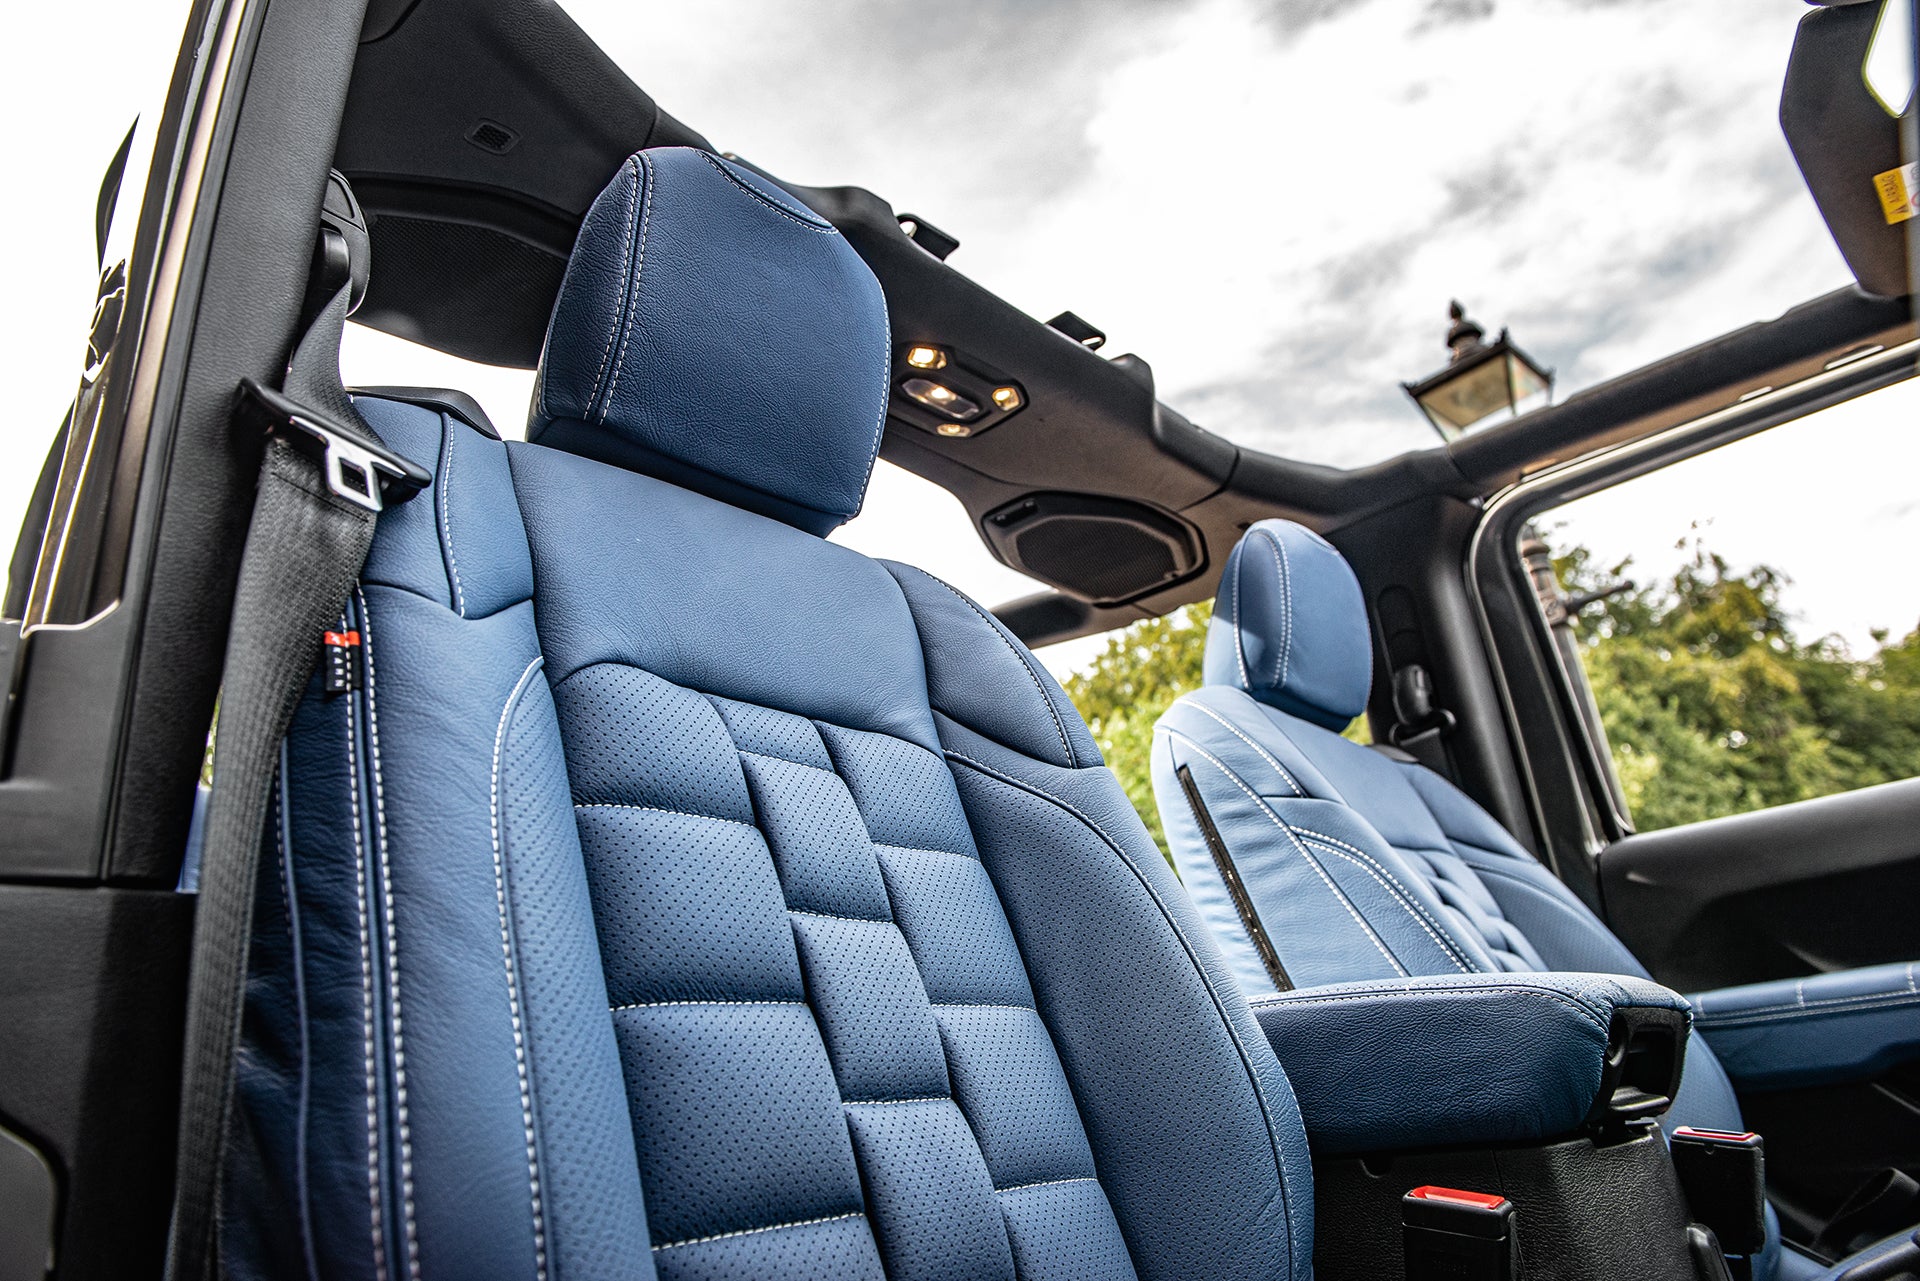 Jeep Wrangler JL 2 Door Leather Interior - Blue Edition